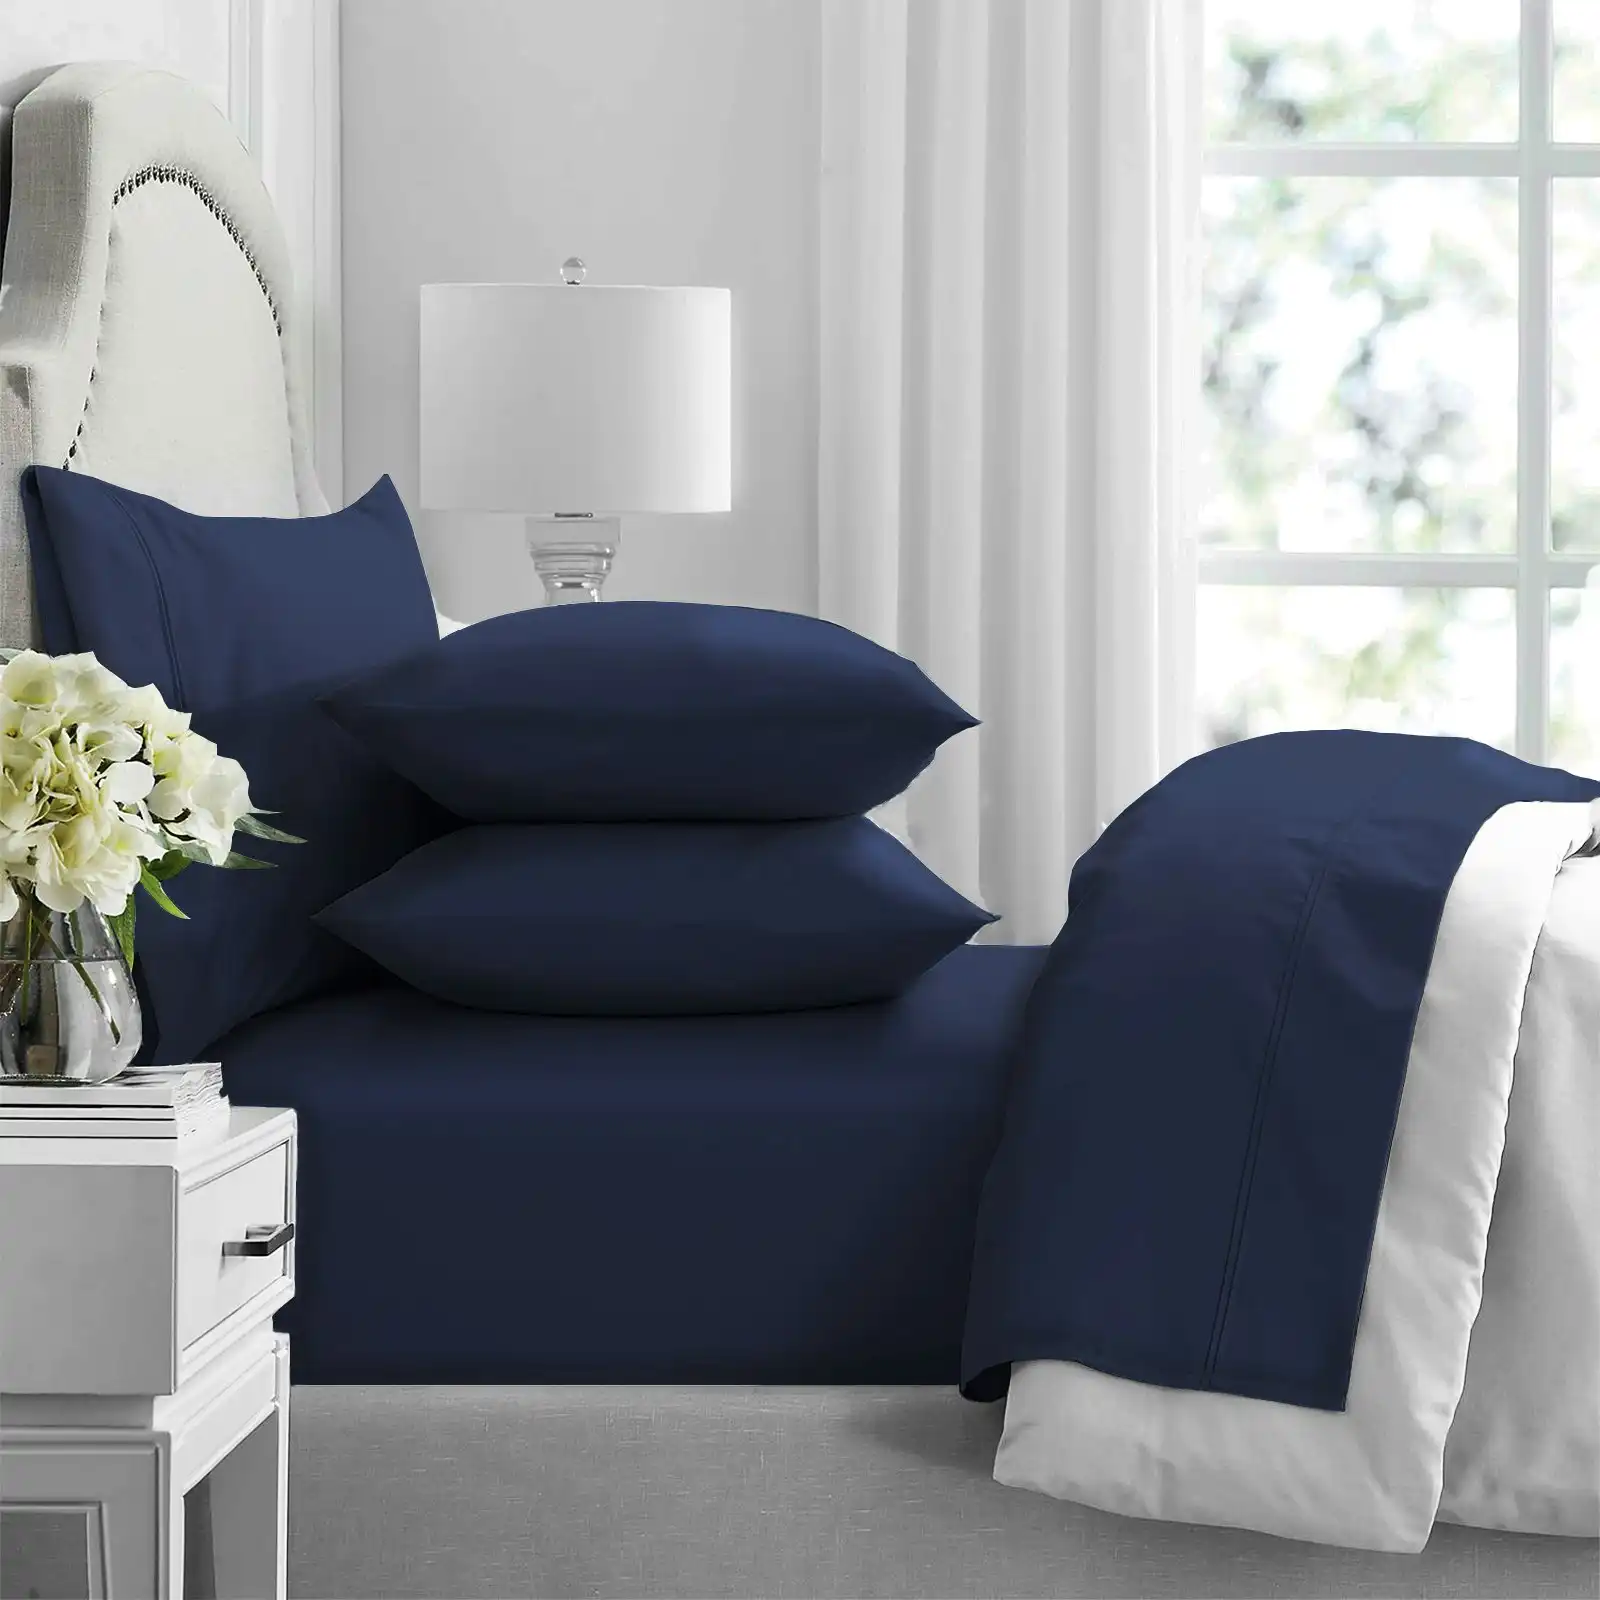 Renee Taylor King Bed Sheet Set Premium 1000TC  Egyptian Cotton Bedding Indigo